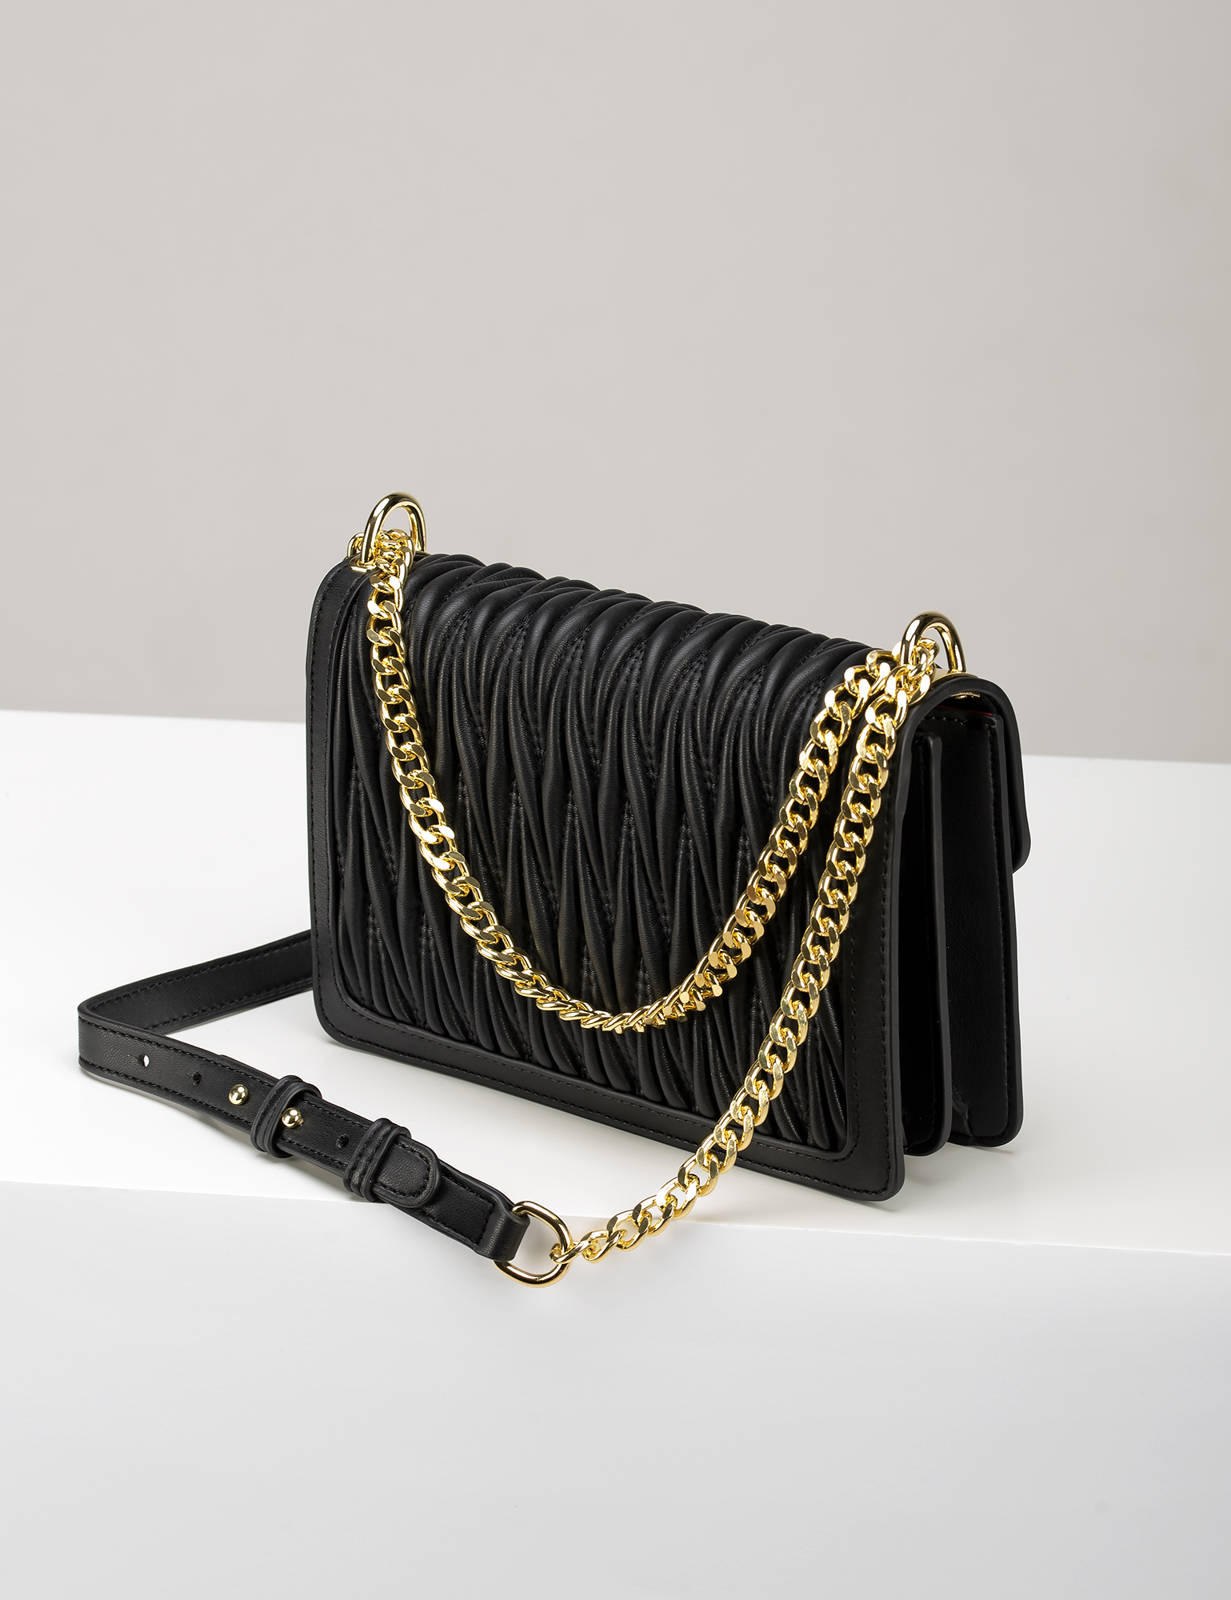 Useful Manifold audible Molton Czarna pikowana torebka na łańcuszku | Outlet | Elegancka i  ekskluzywna odzież damska - sklep internetowy MOLTON